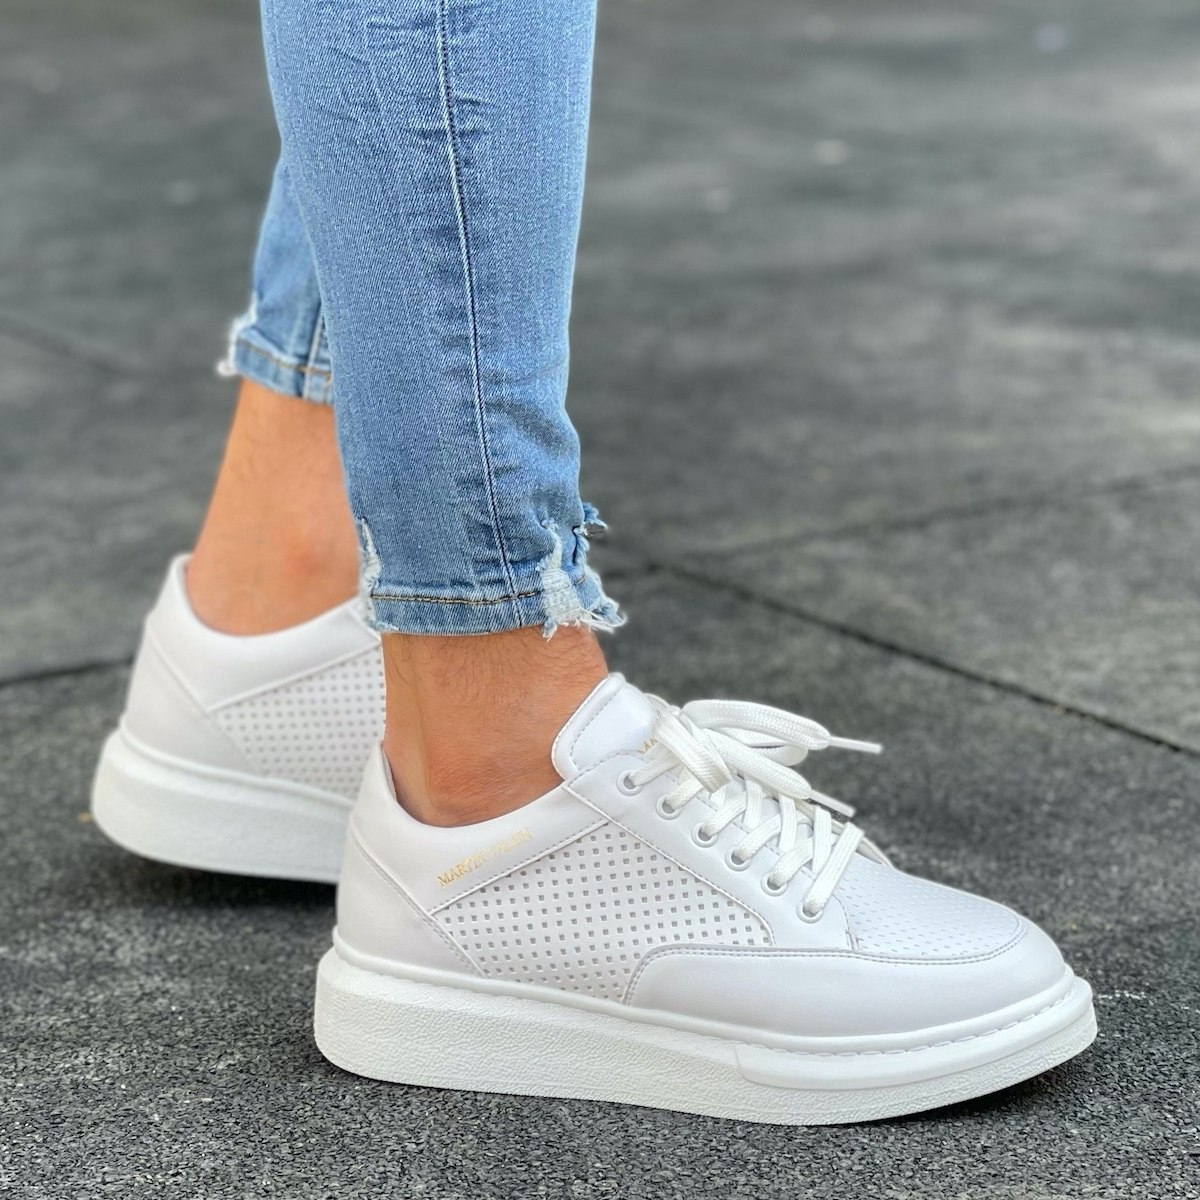 Collega Coöperatie Kruipen Casual Sneakers with Partial-Mesh Design in White